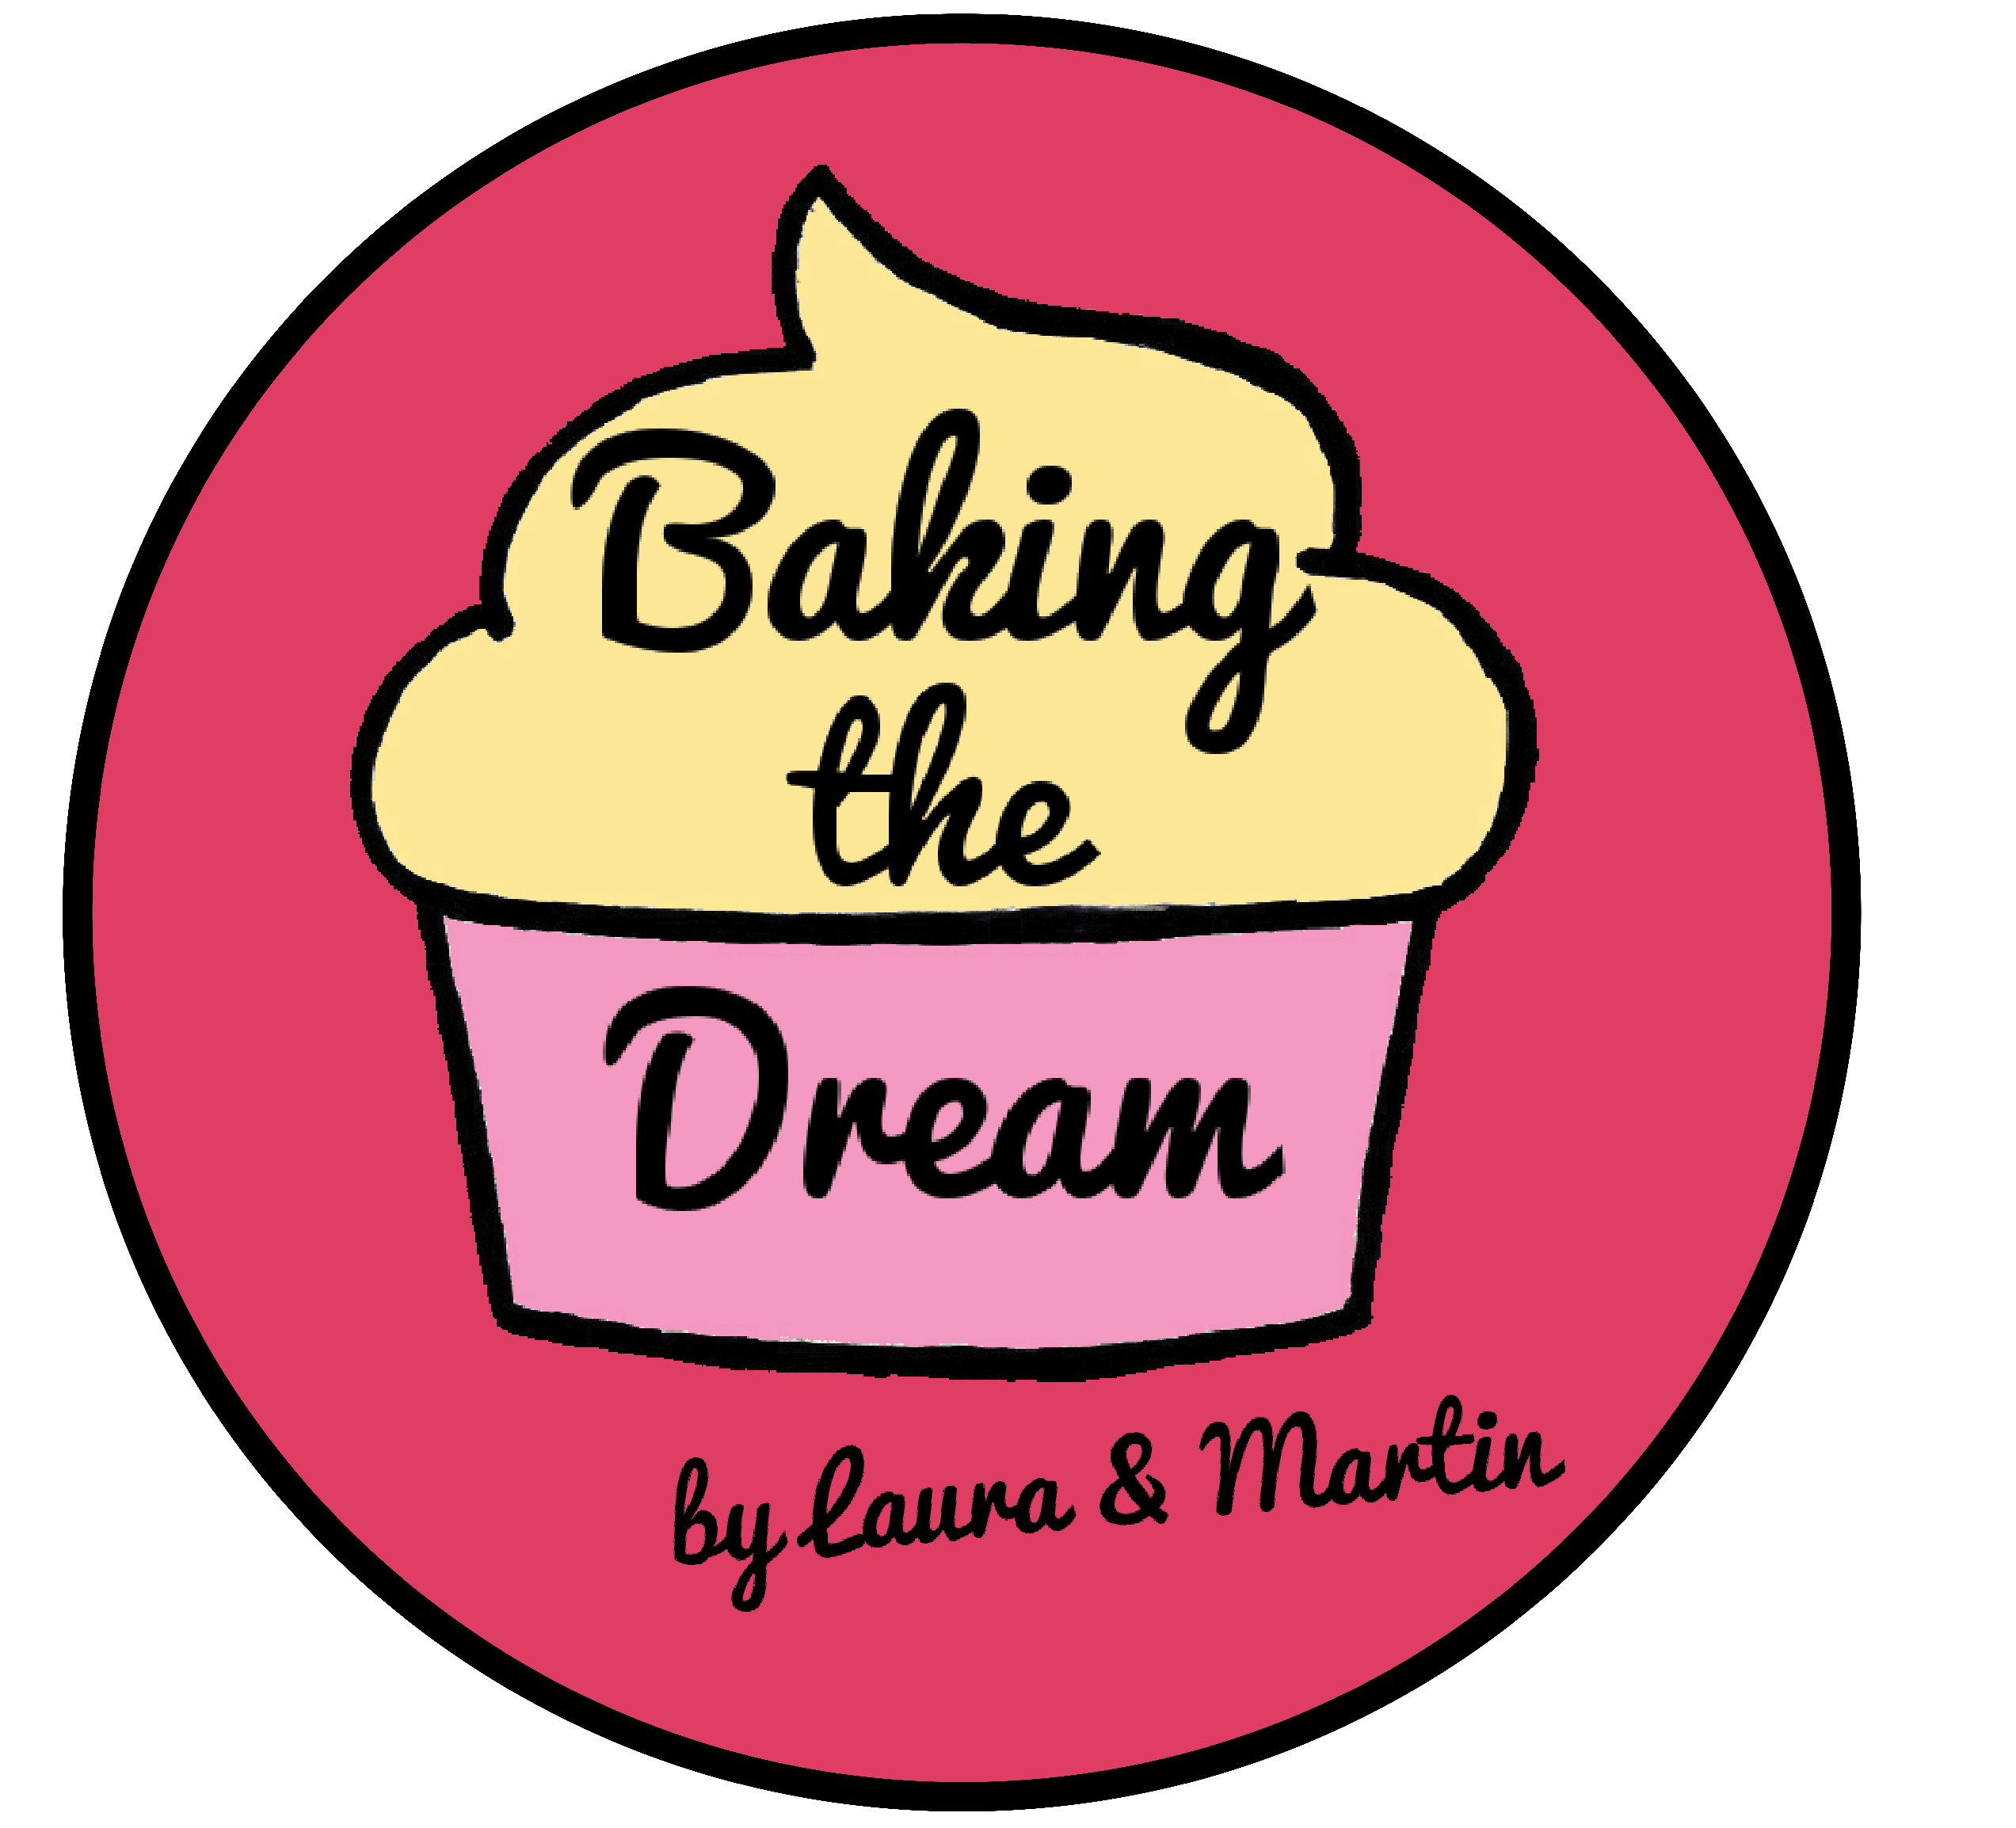 Baking the Dream